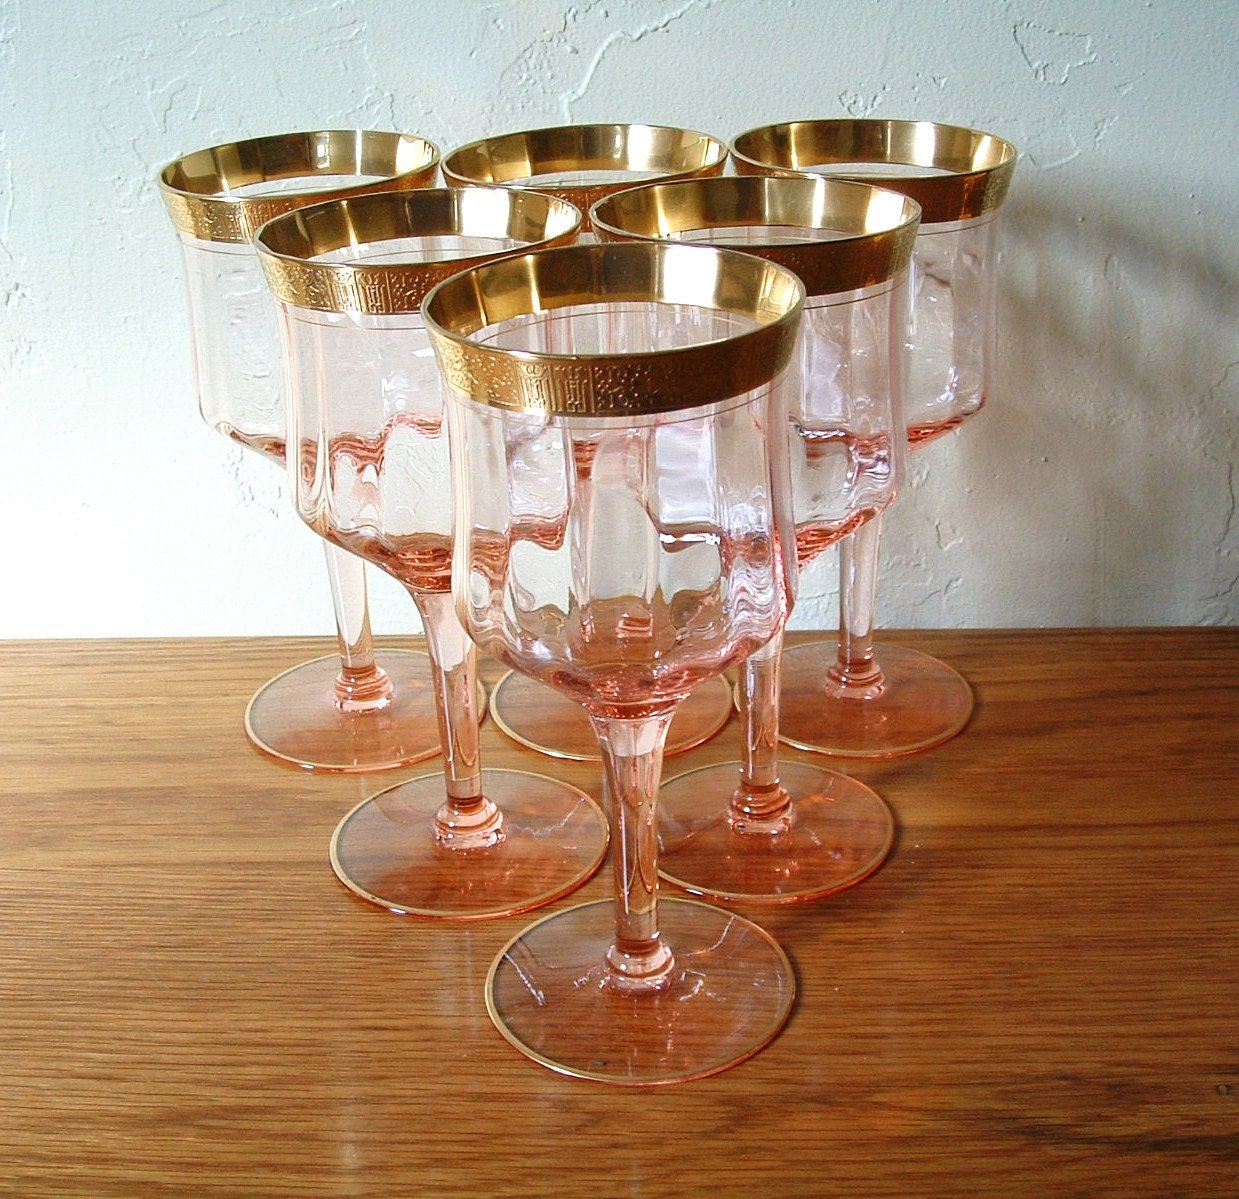 pink wine glasses